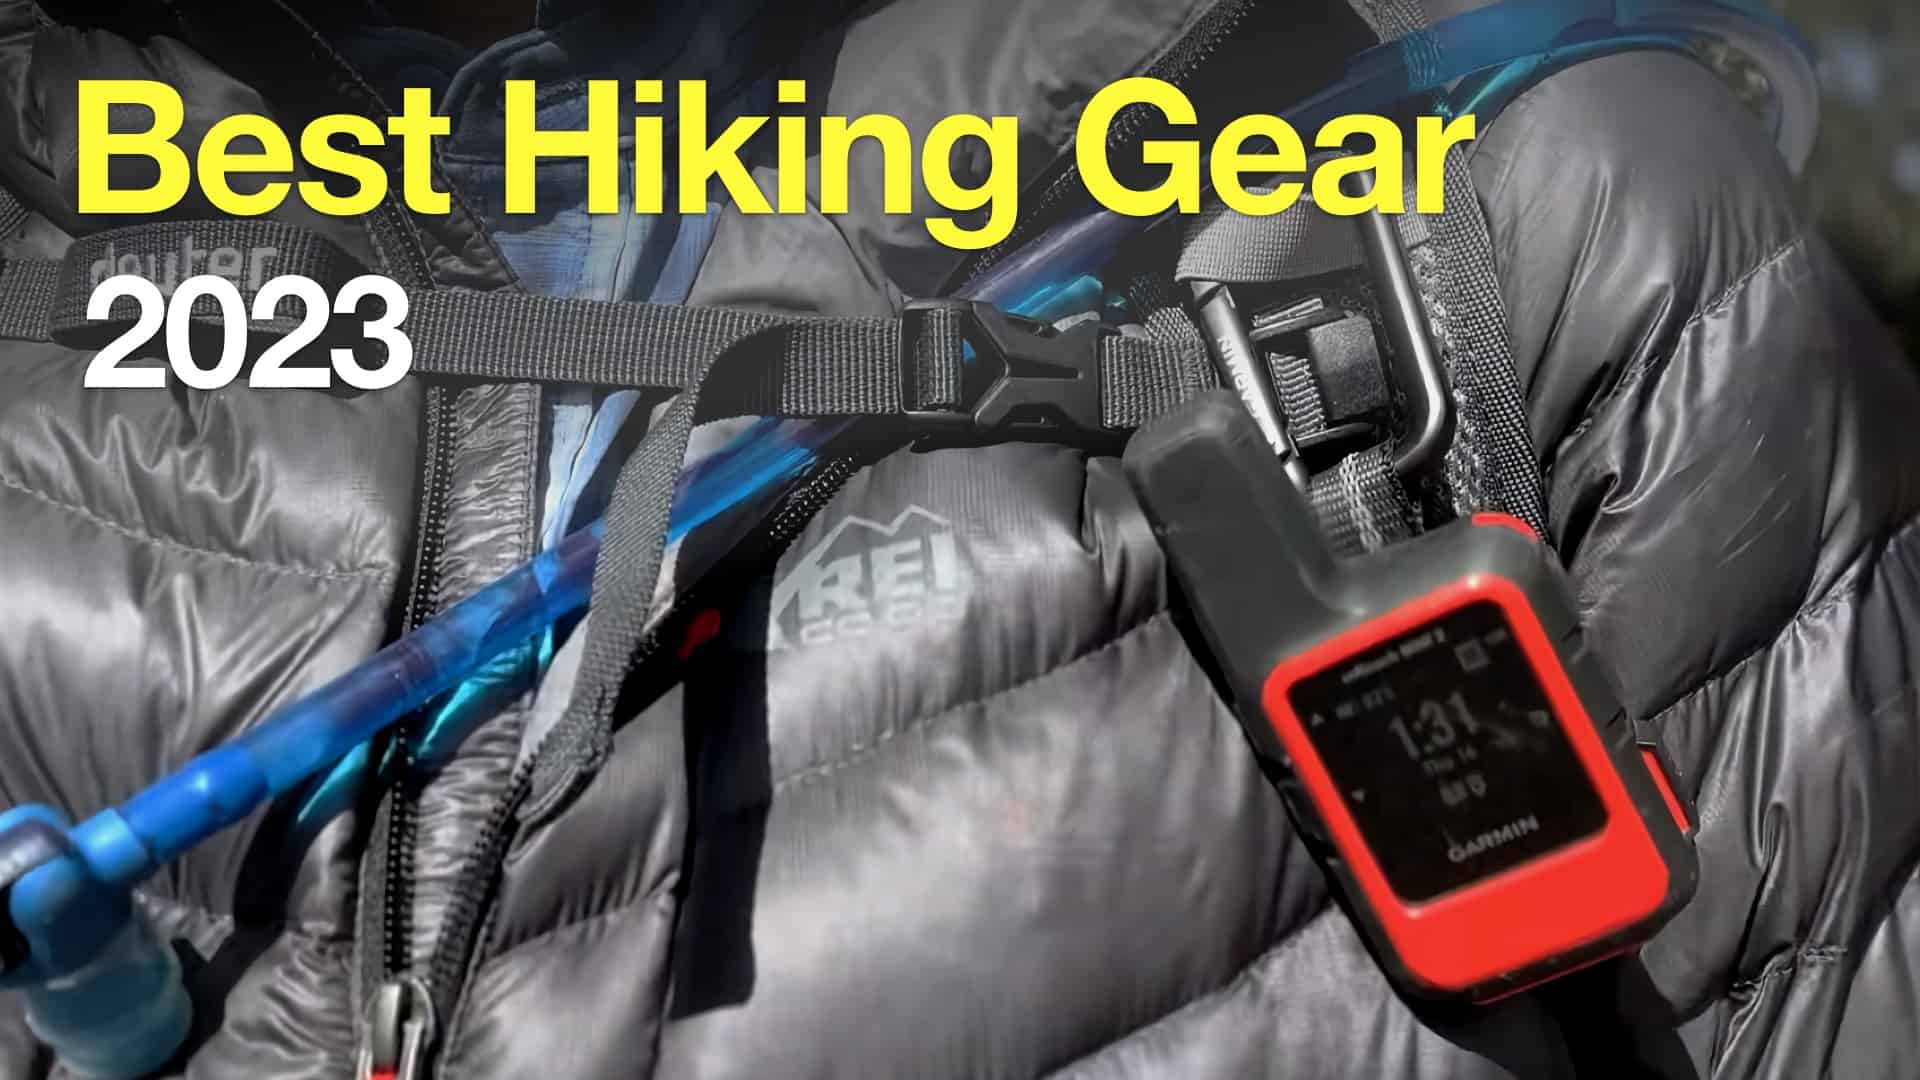 https://hikingguy.com/wp-content/uploads/best-hiking-gear-2023.jpg